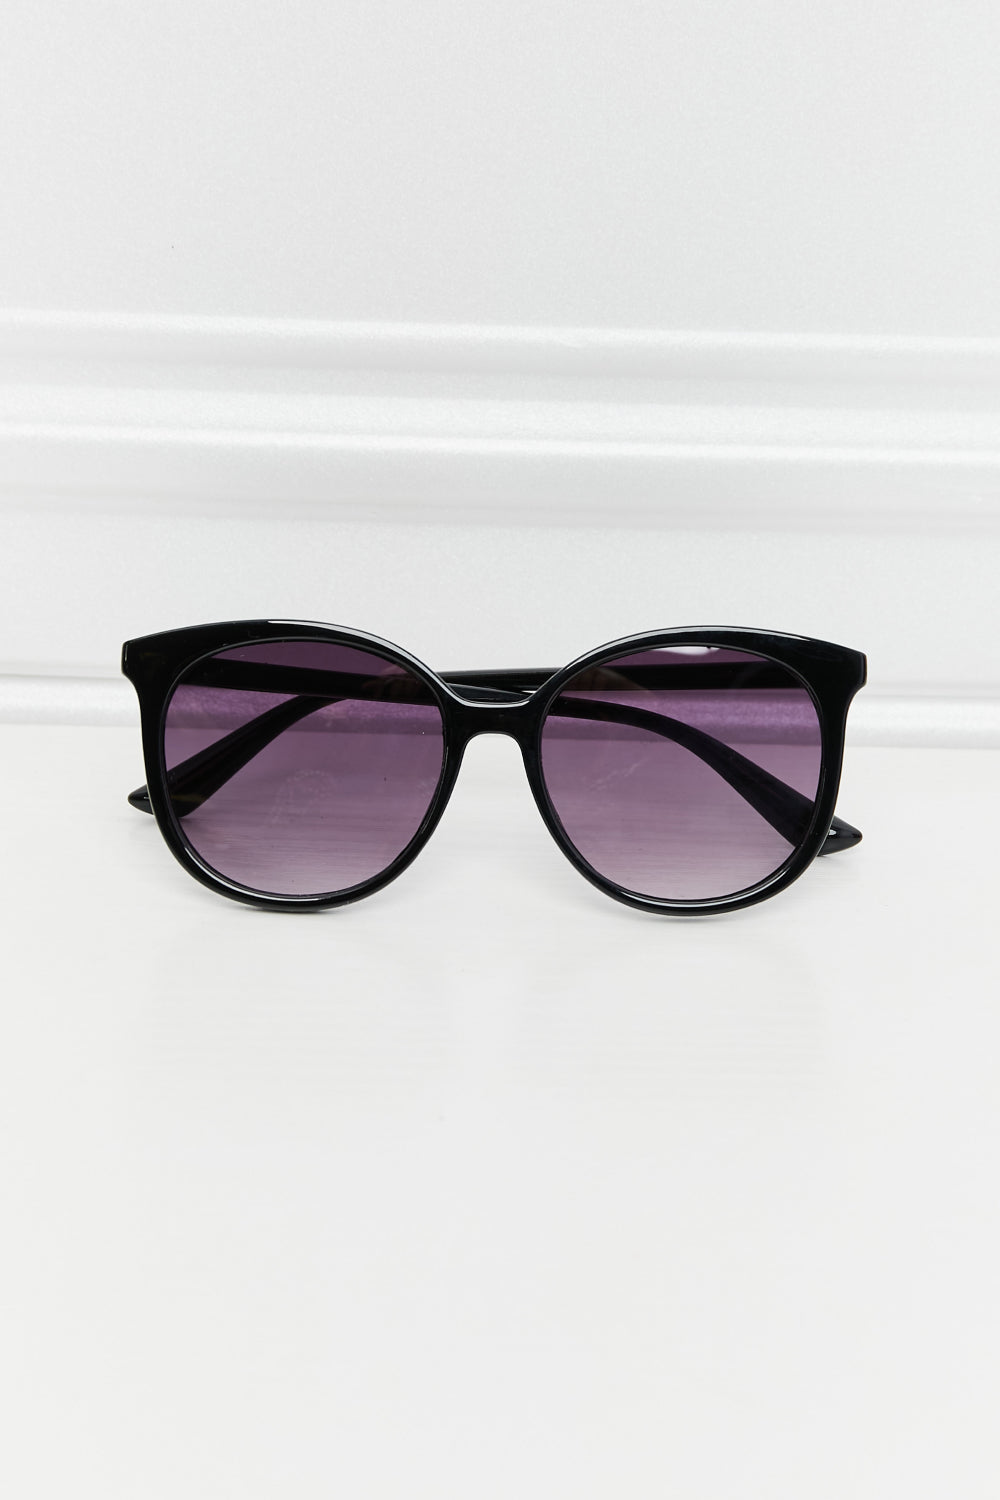 Polycarbonate Frame Full Rim Sunglasses - BEAUTY COSMOTICS SHOP